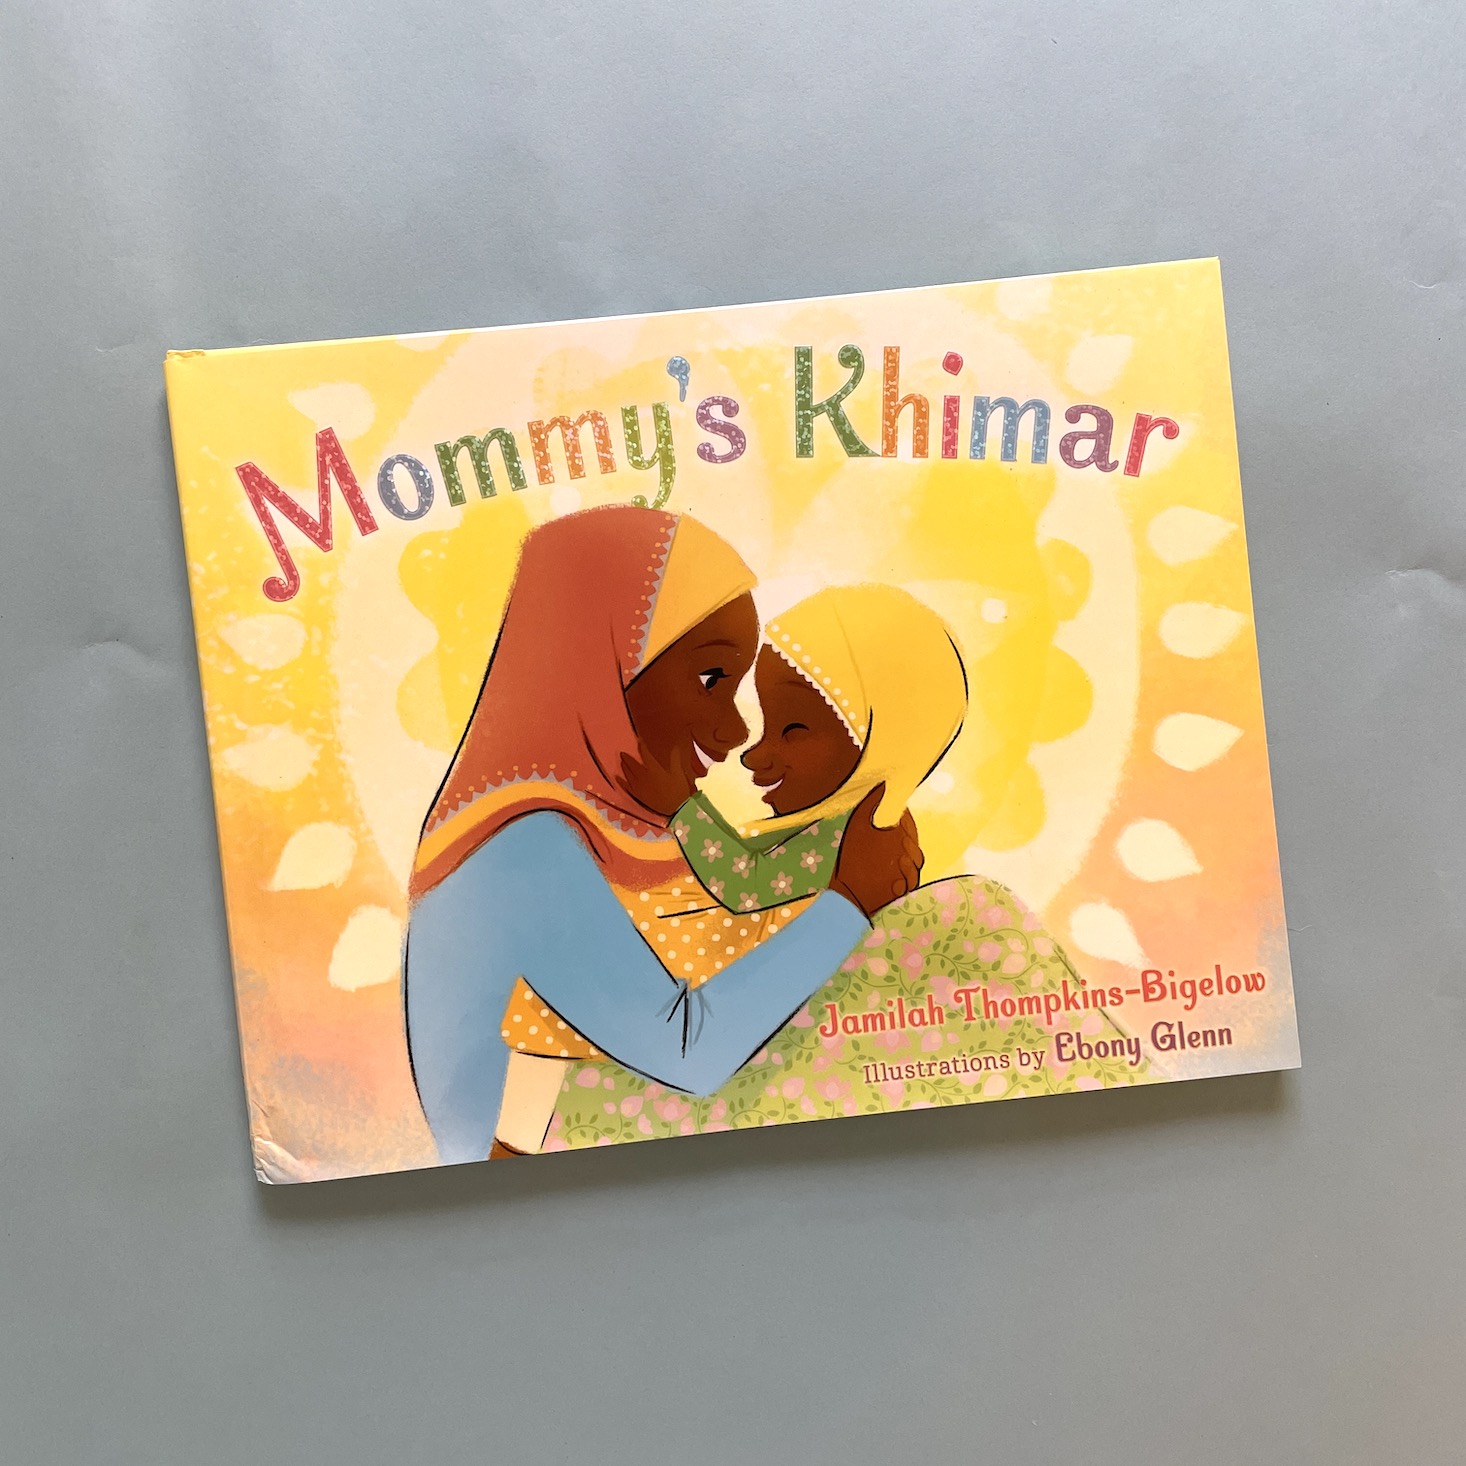 Little Feminist Age 2-4 book: Mommy